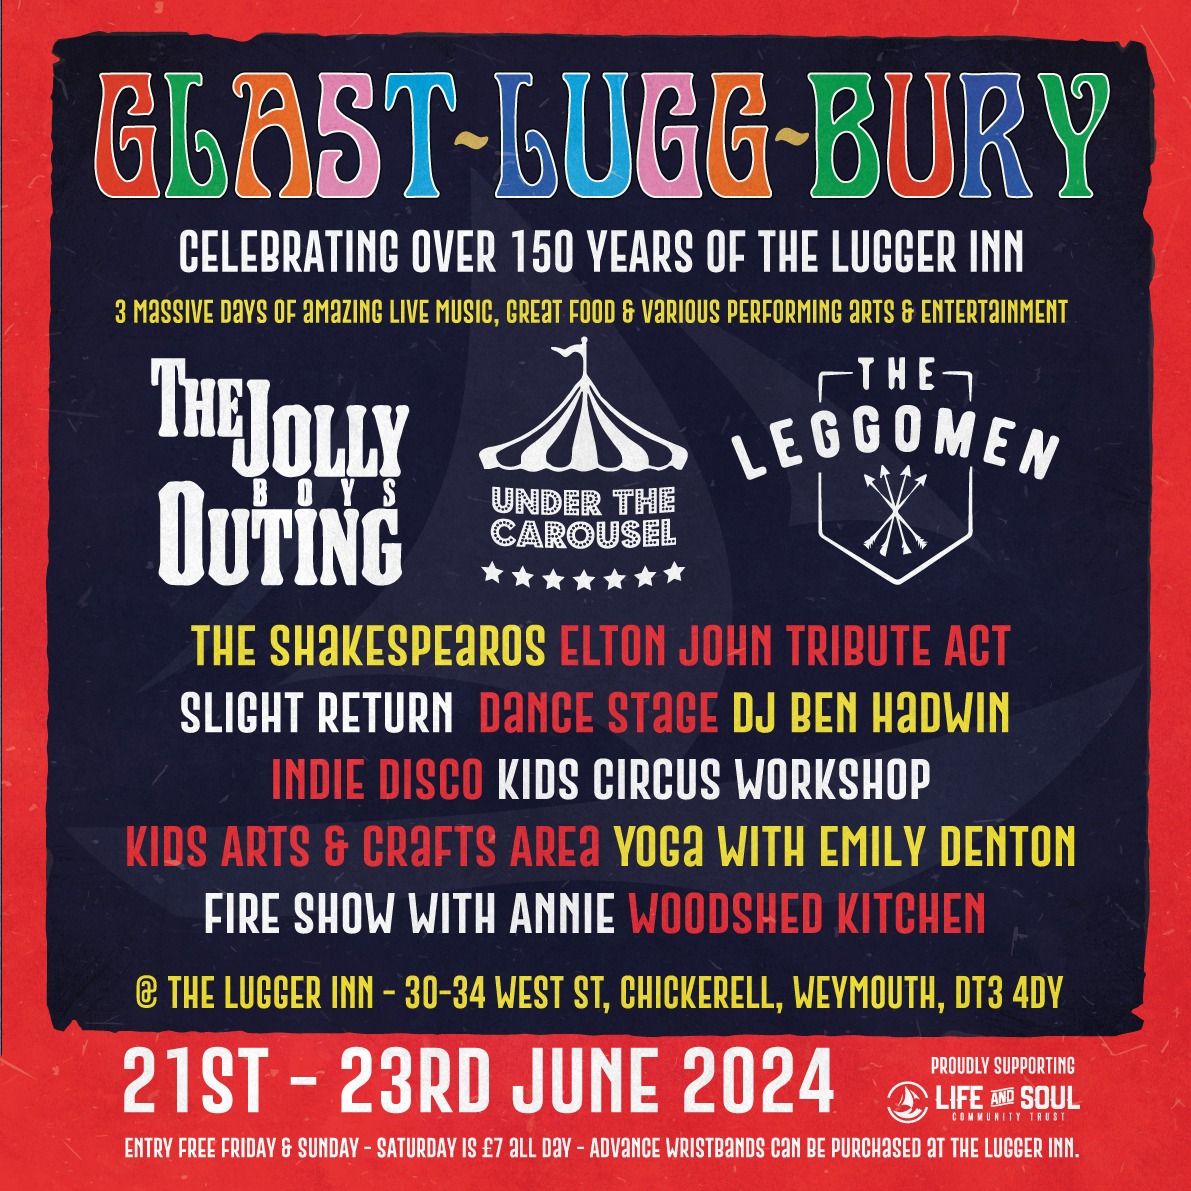 GLAST-LUGG-BURY 2024 @ The Lugger Inn, Weymouth.